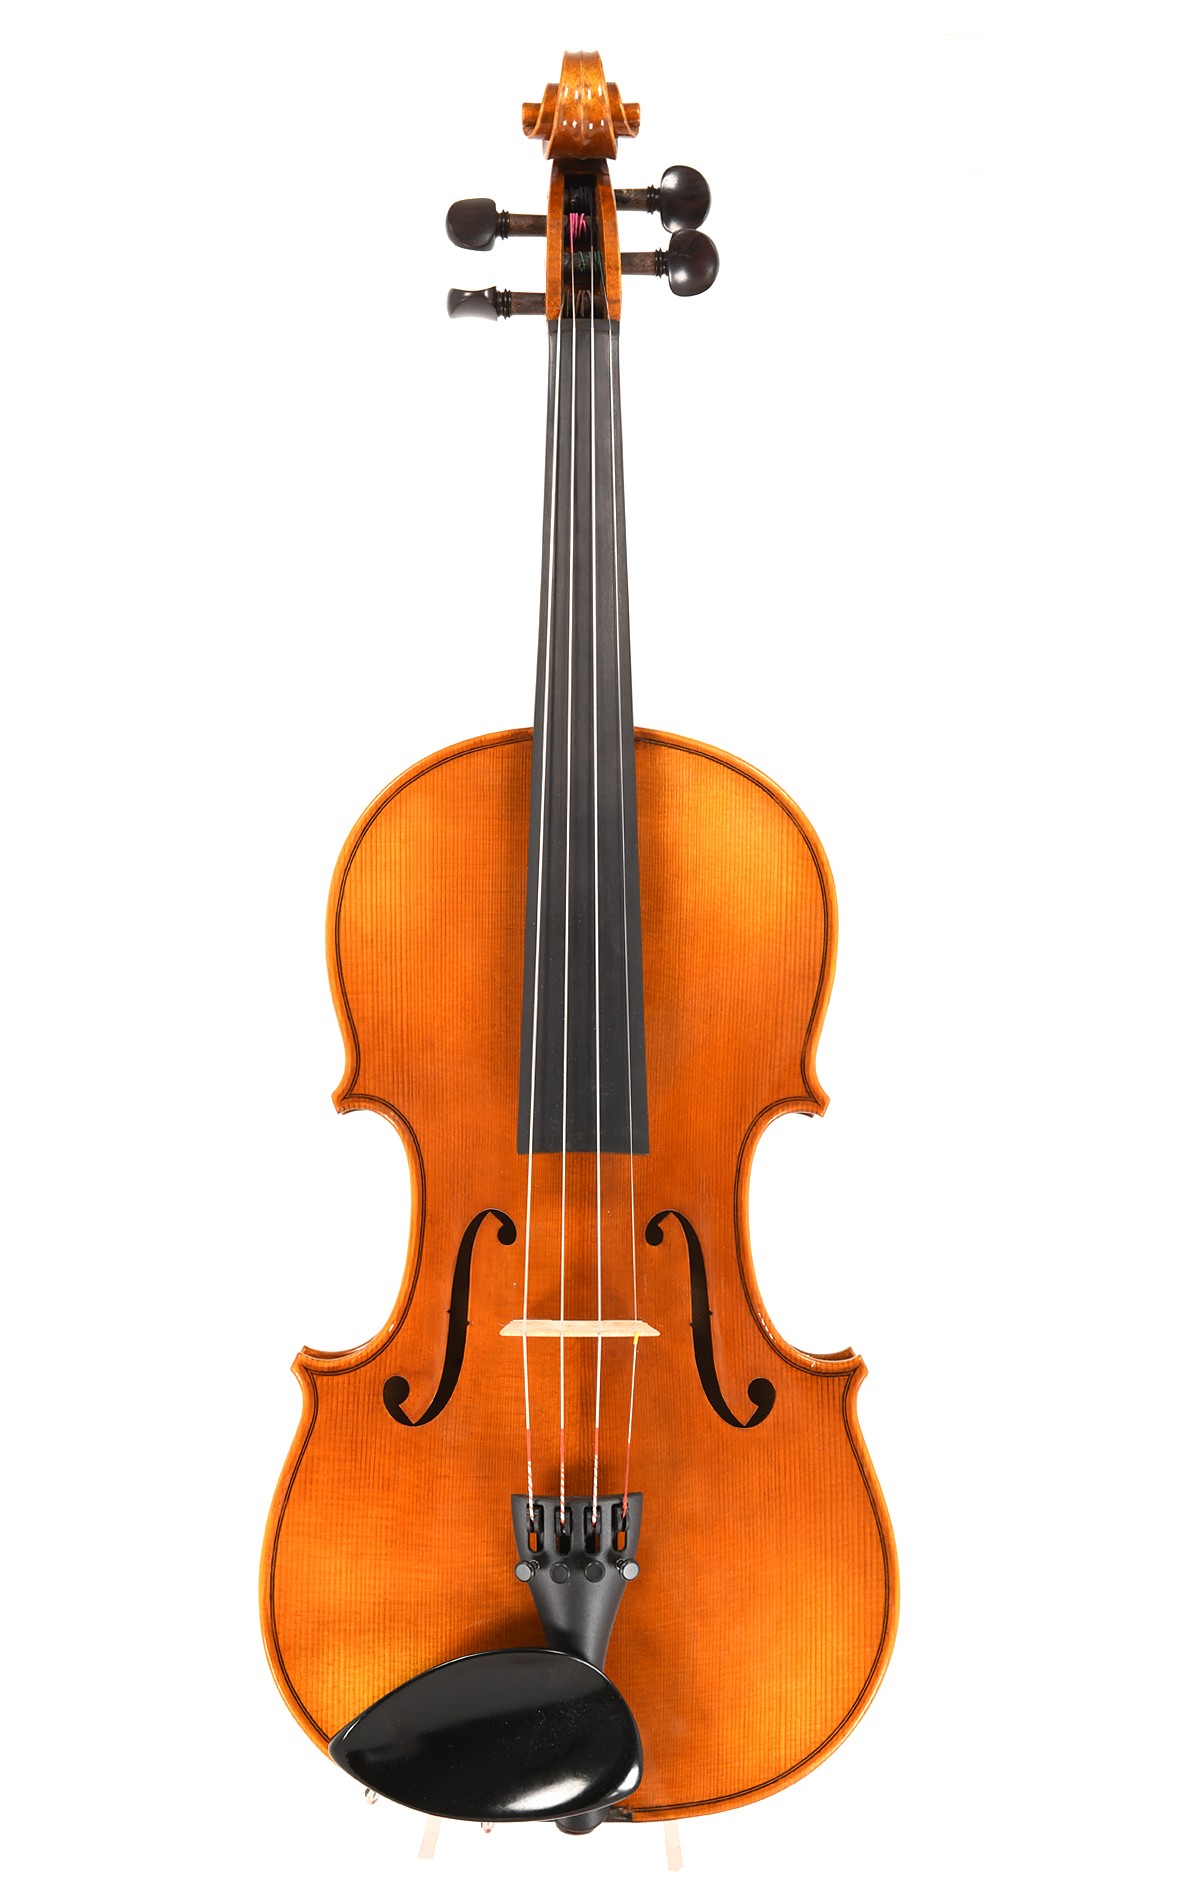 Modern violin. Probably Markneukirchen approx. 1980